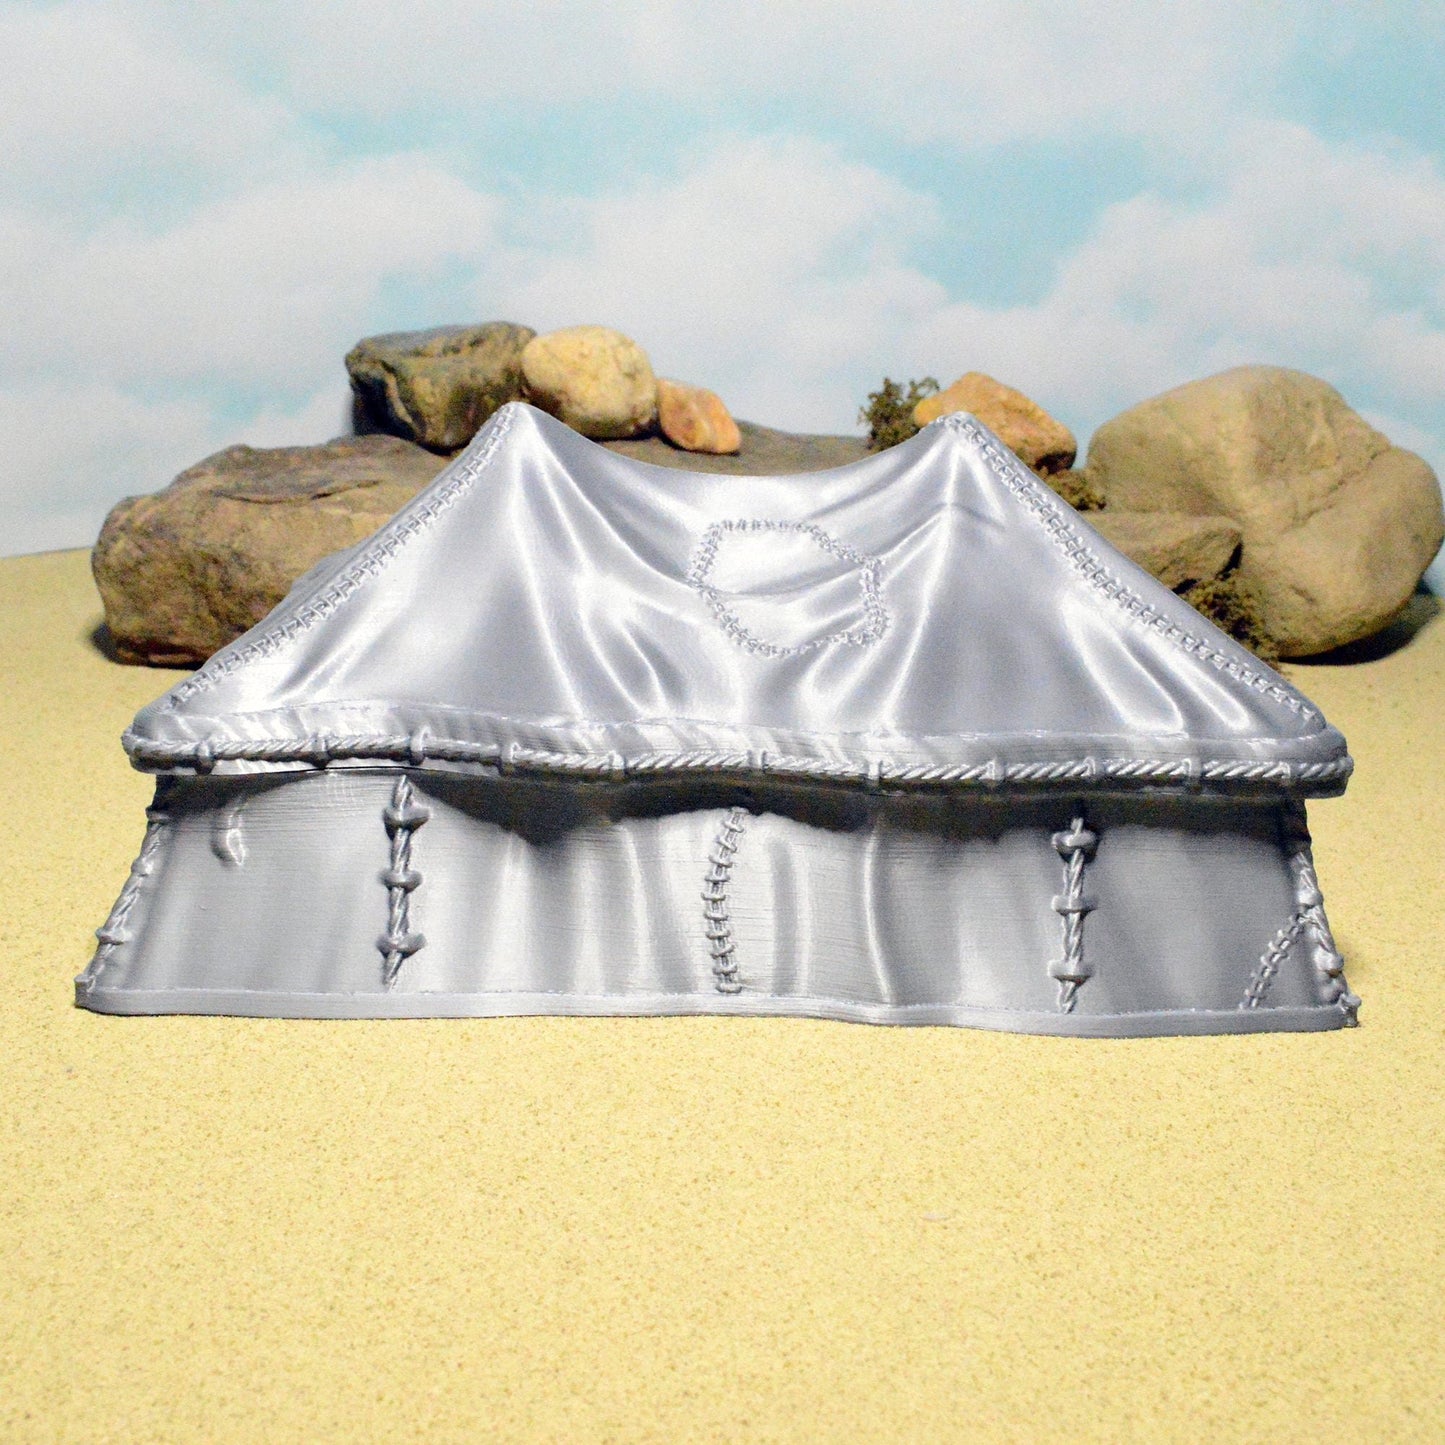 Grand Tent 15mm 28mm for D&D Camp Terrain, DnD Terrain, Pathfinder Terrain, Miniature Tent, Market Tent, Camp Tent, Bazaar Tent